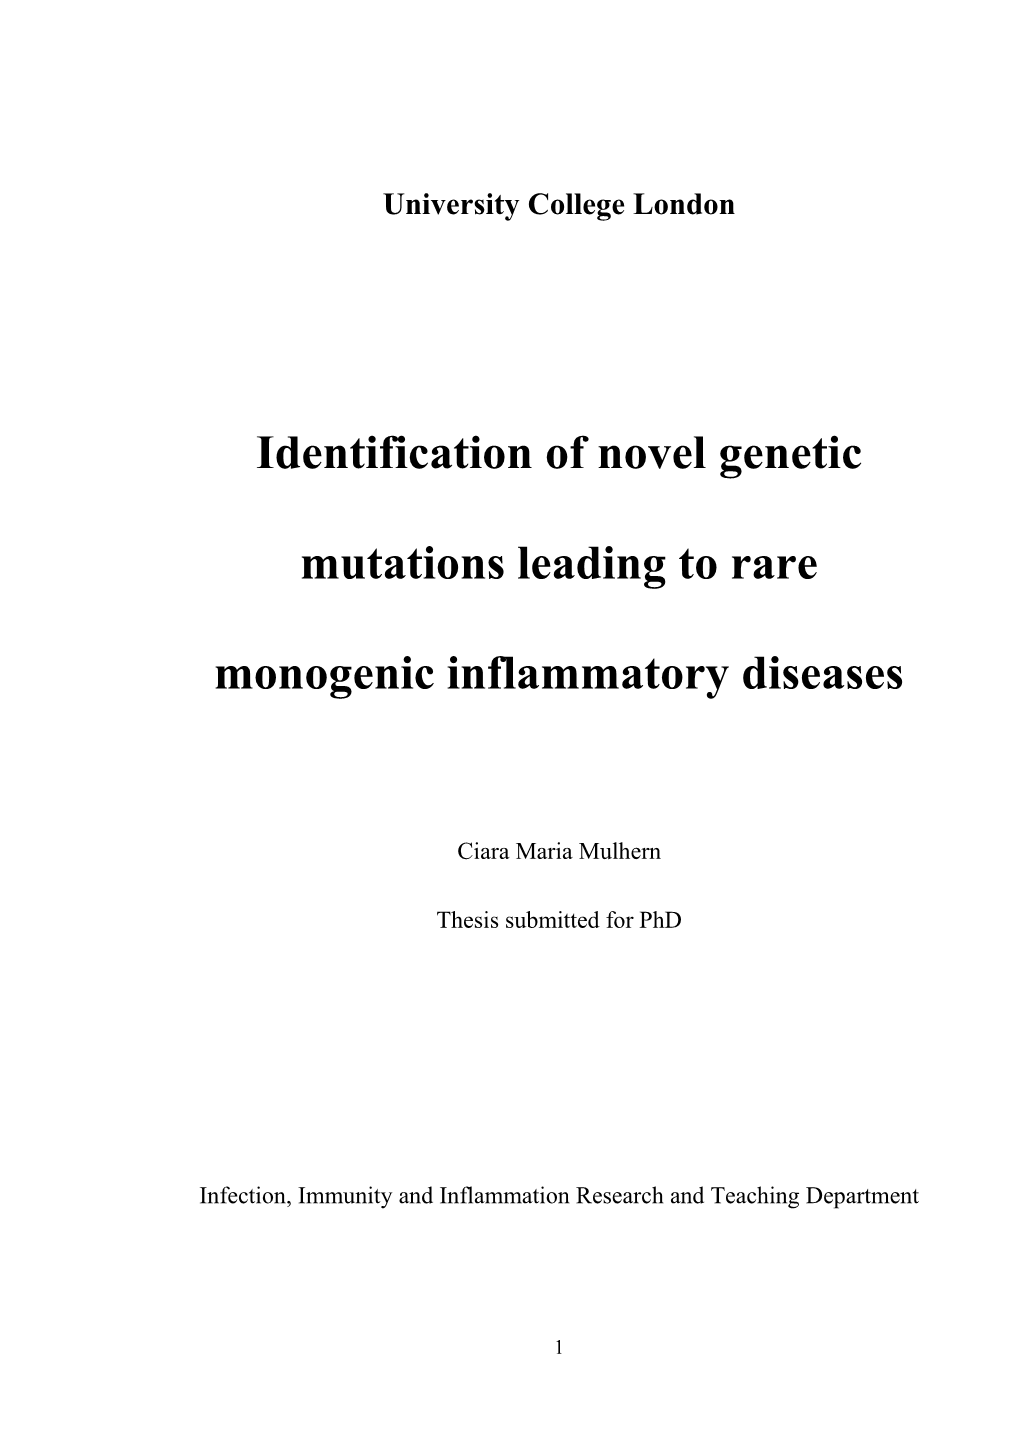 Identification of Novel Genetic Mutations Leading to Rare Monogenic Inflammatory Diseases